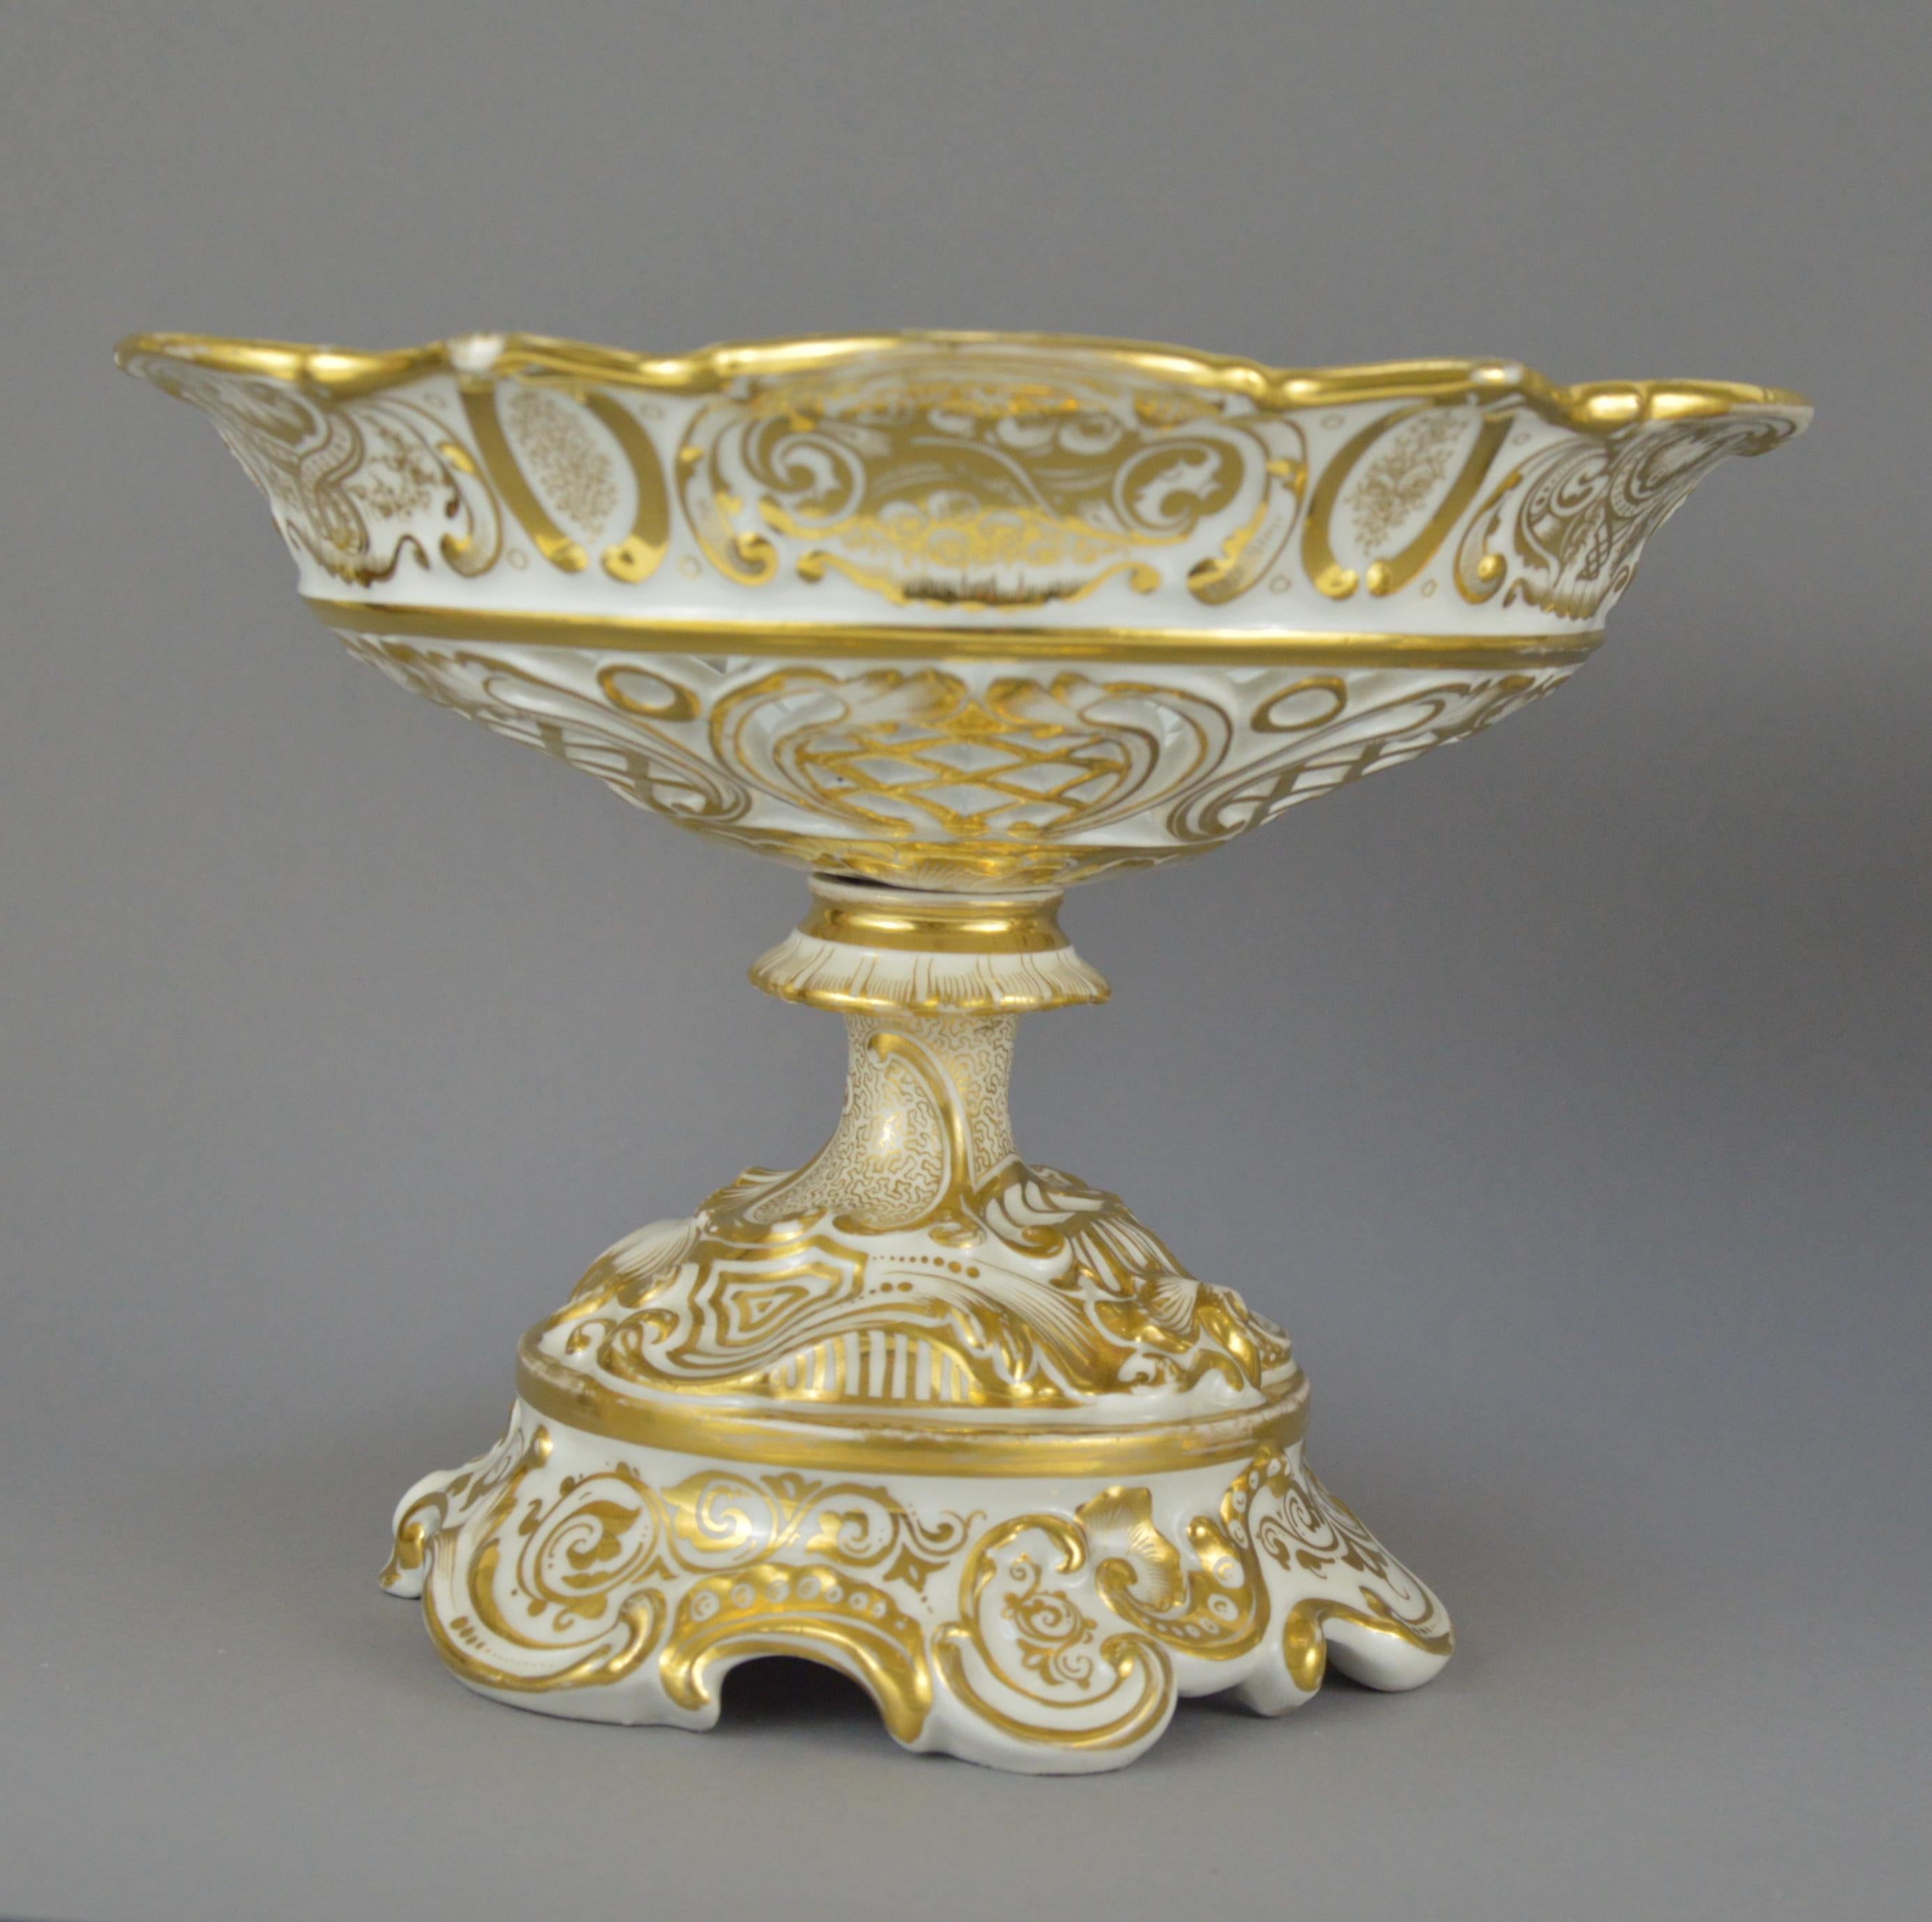 Pair of large gilt Old Brussels porcelain vases. Belgium, 19th century, 1840s-1860s.
Dimensions: diameter - 26 cm, hauteur - 16 cm.